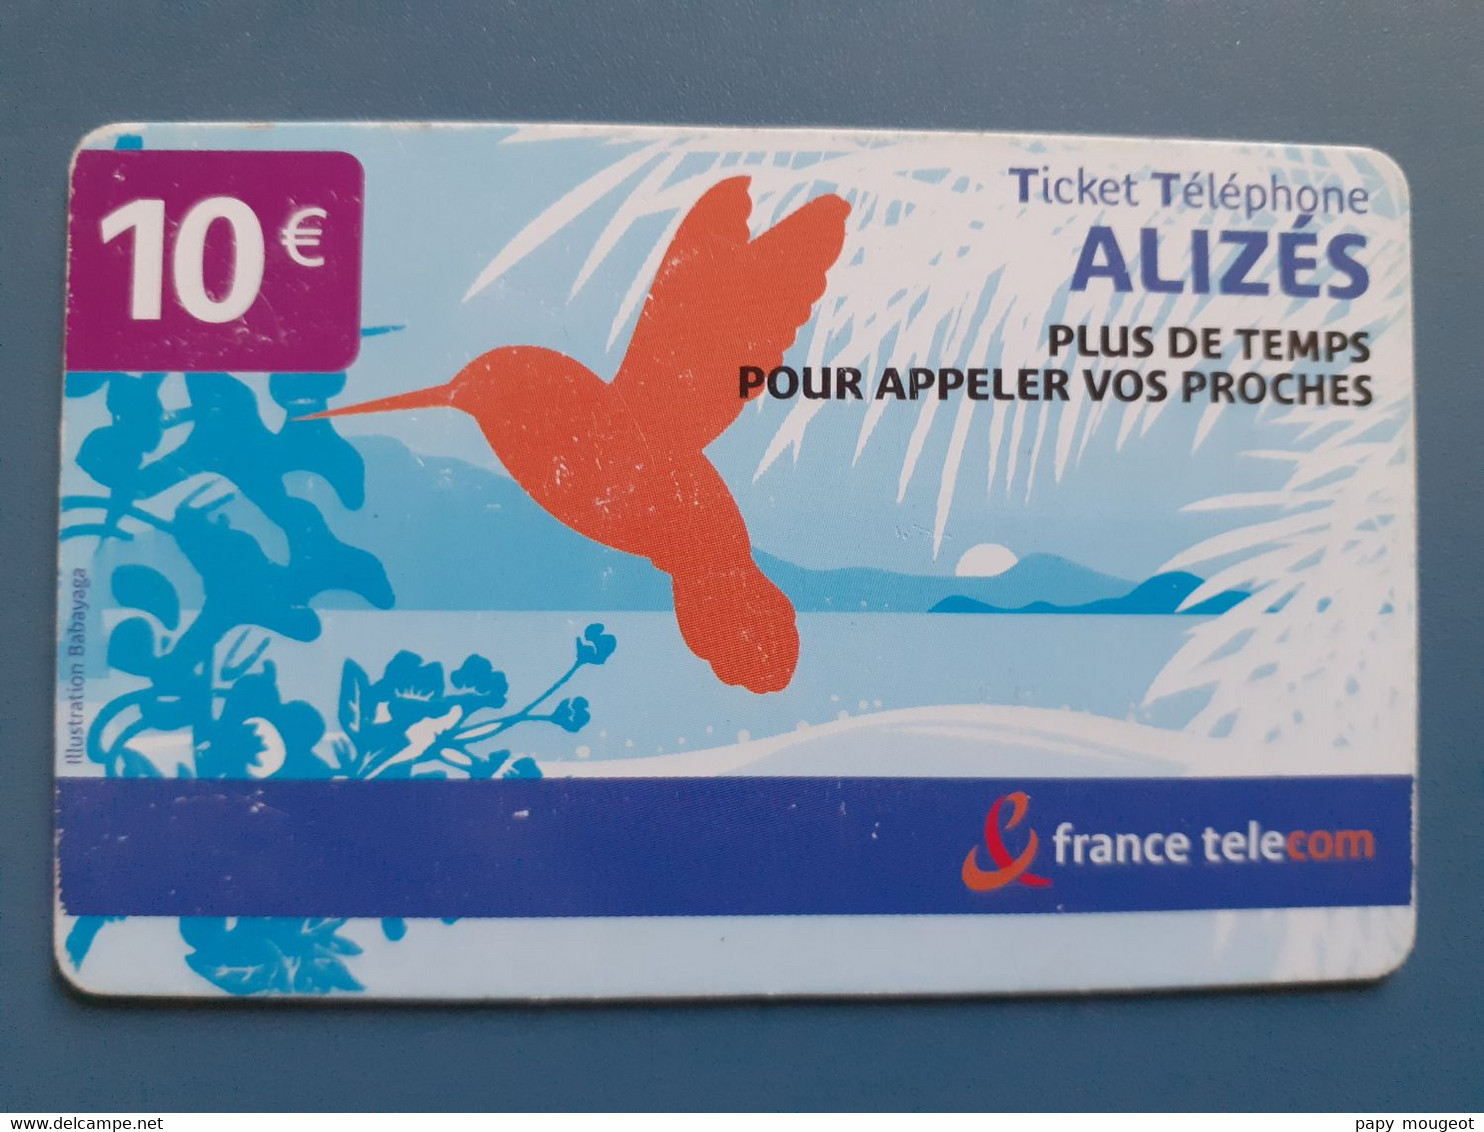 Ticket Téléphone Alizés France Télécom 10€ Validité 31/01/2008 - Série W 58350026346 - Billetes FT